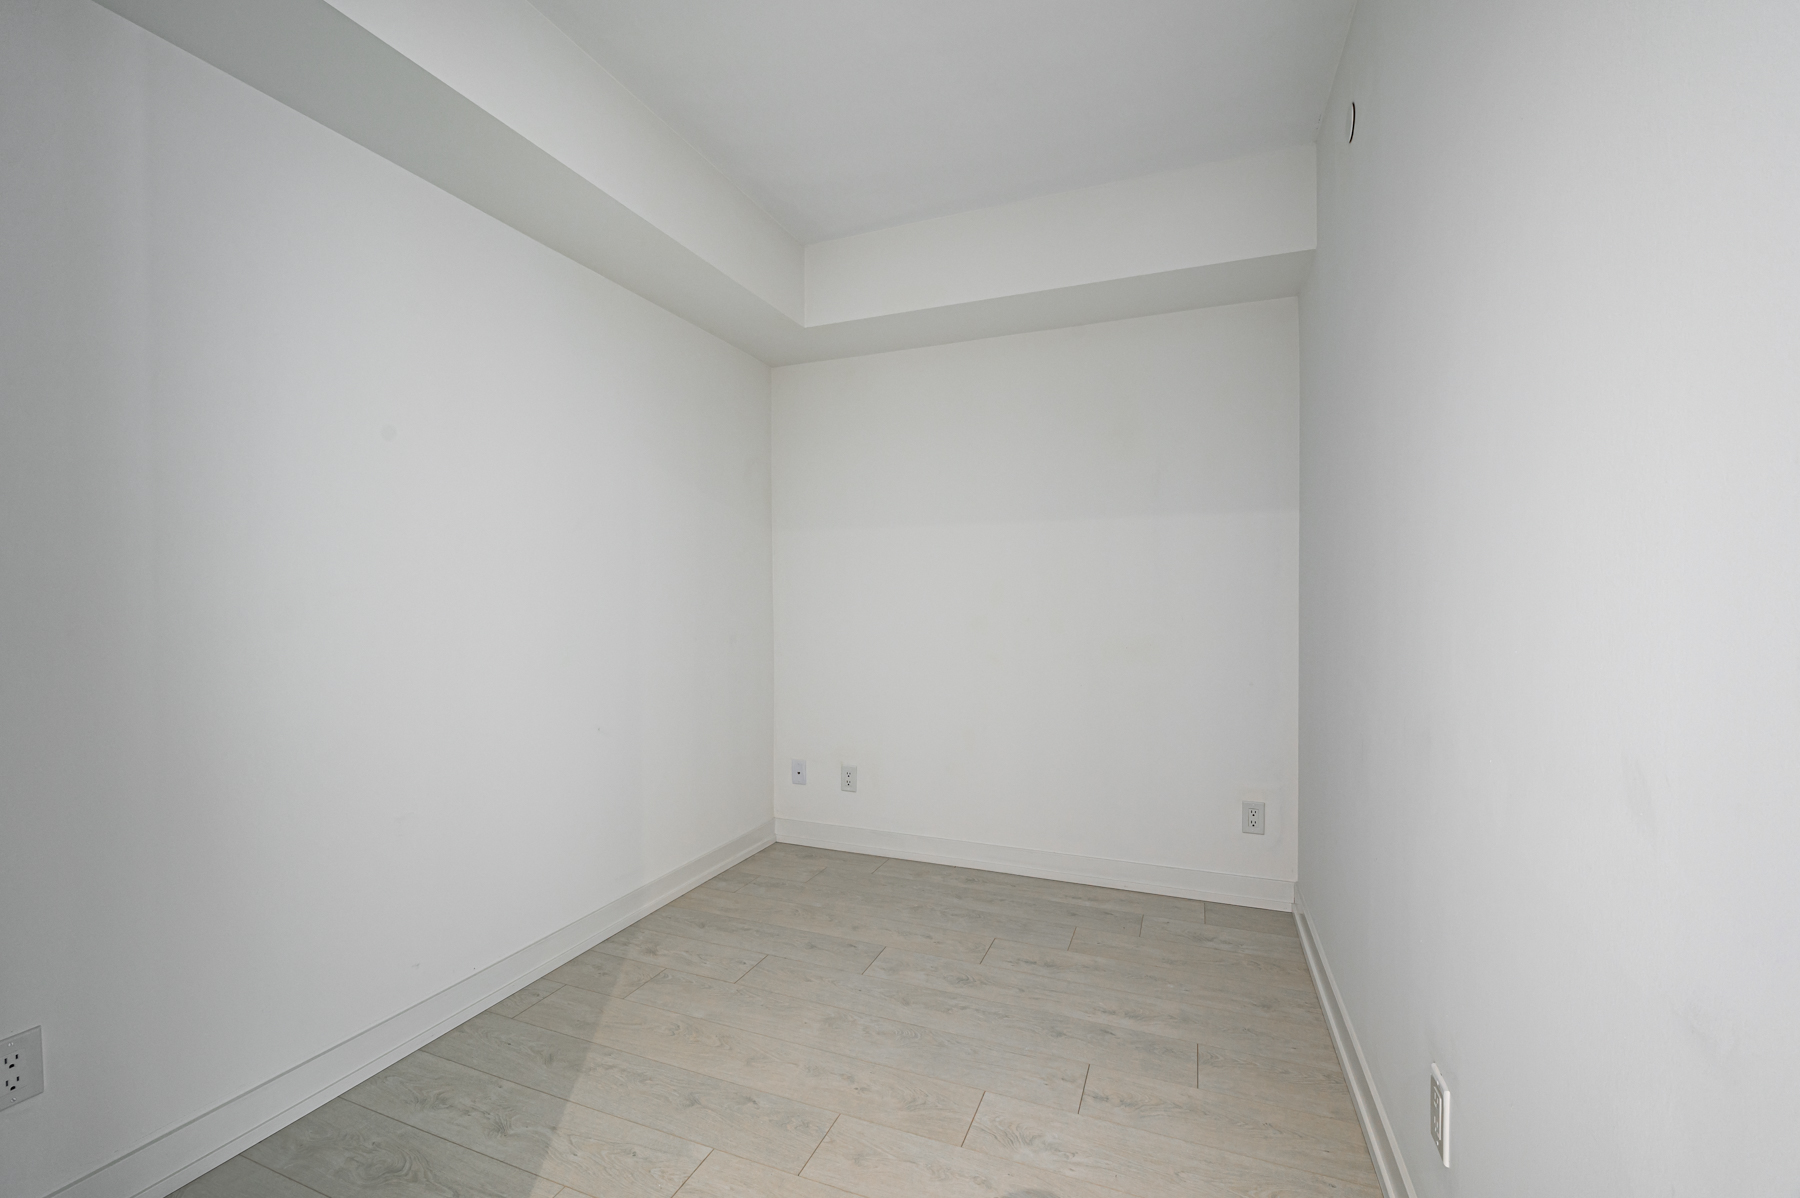 Empty condo den with gray walls and laminate floors.